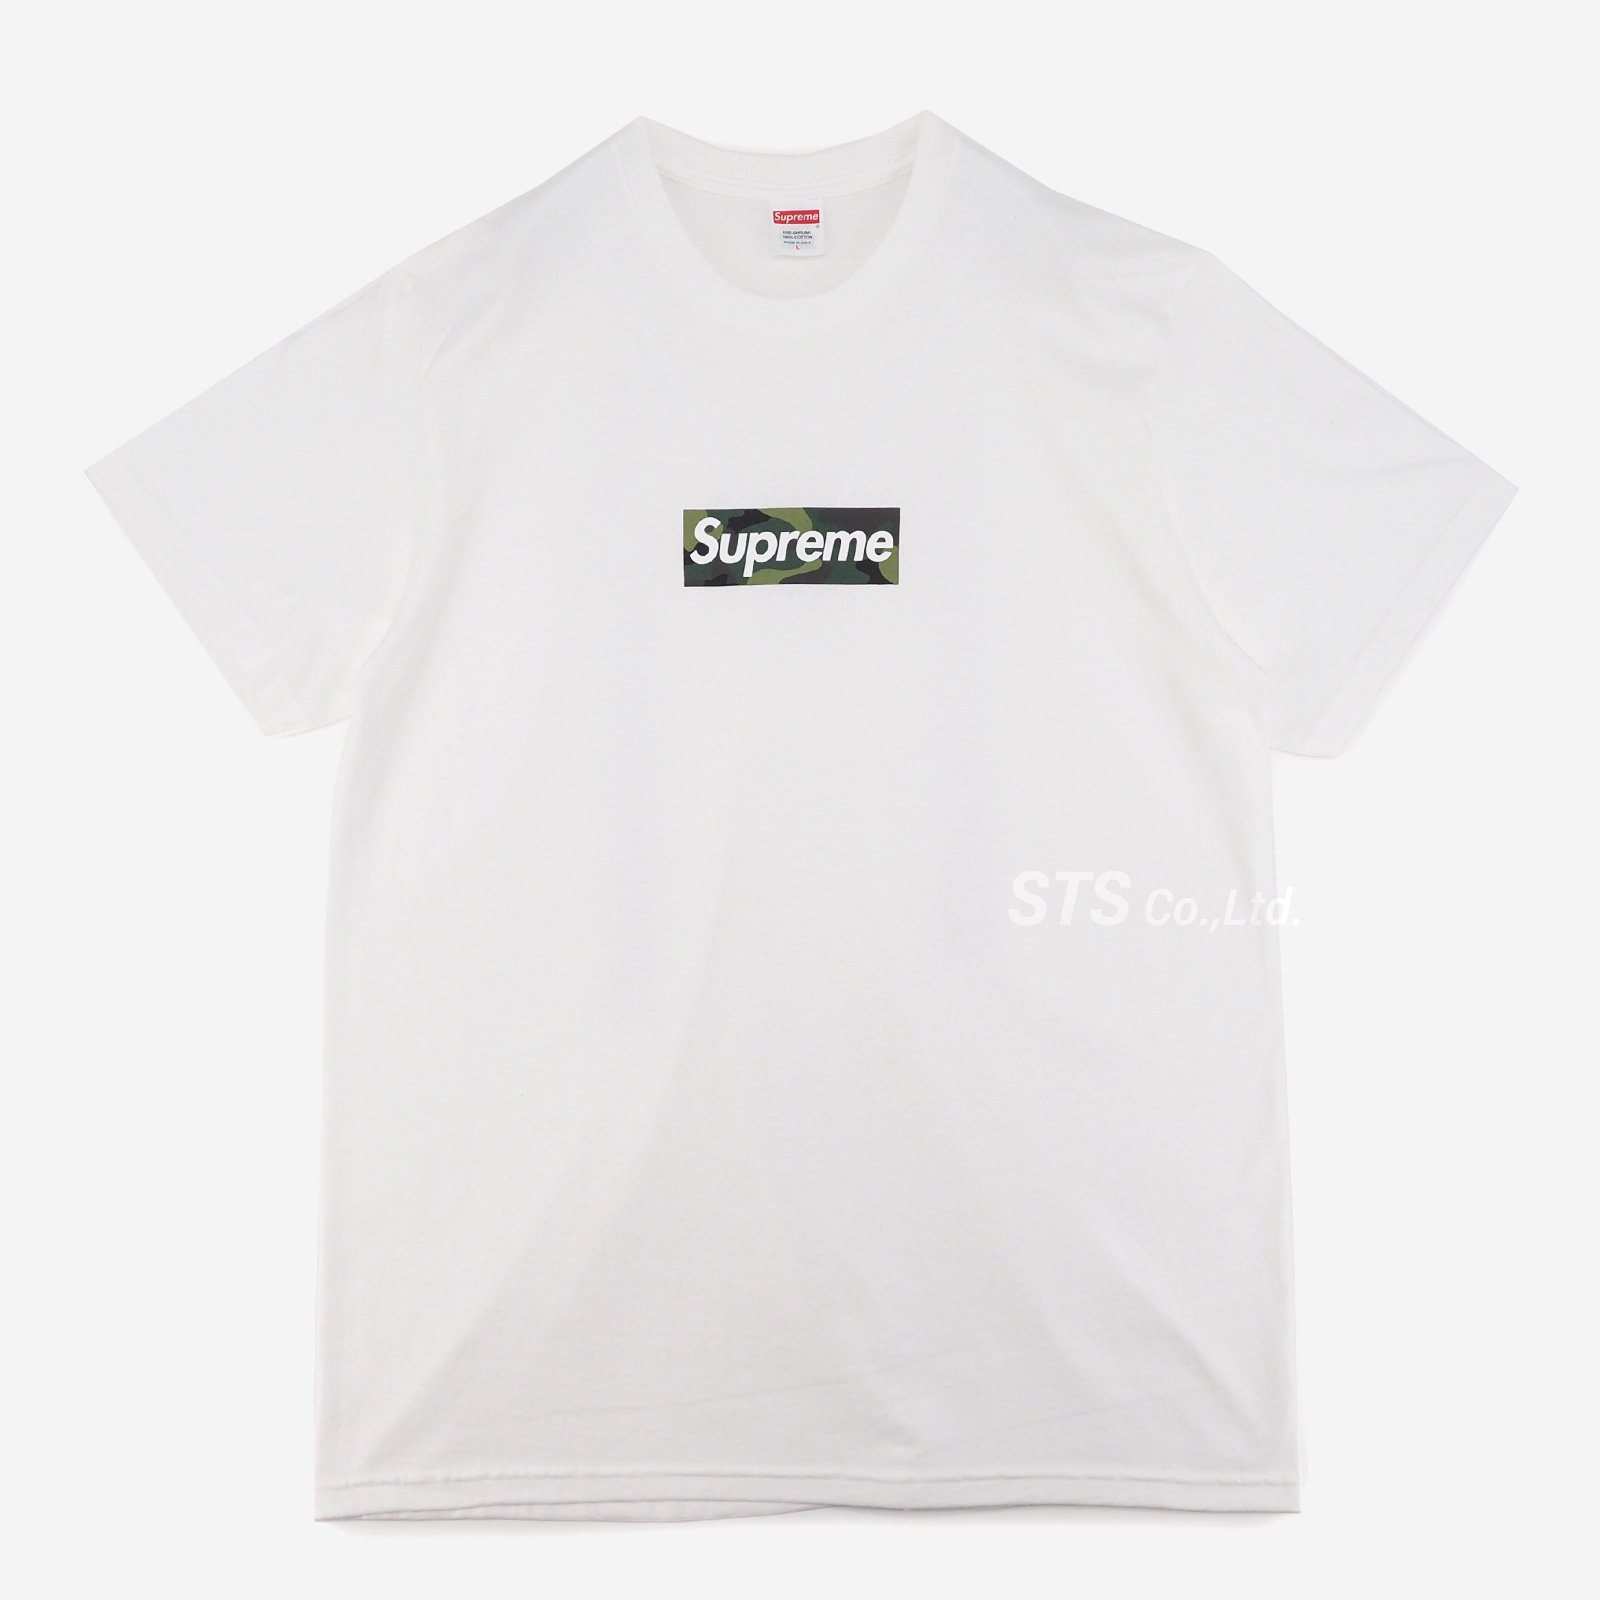 Supreme - Box Logo Tee | 95年アーカイブを採用したTシャツ - ParkSIDER